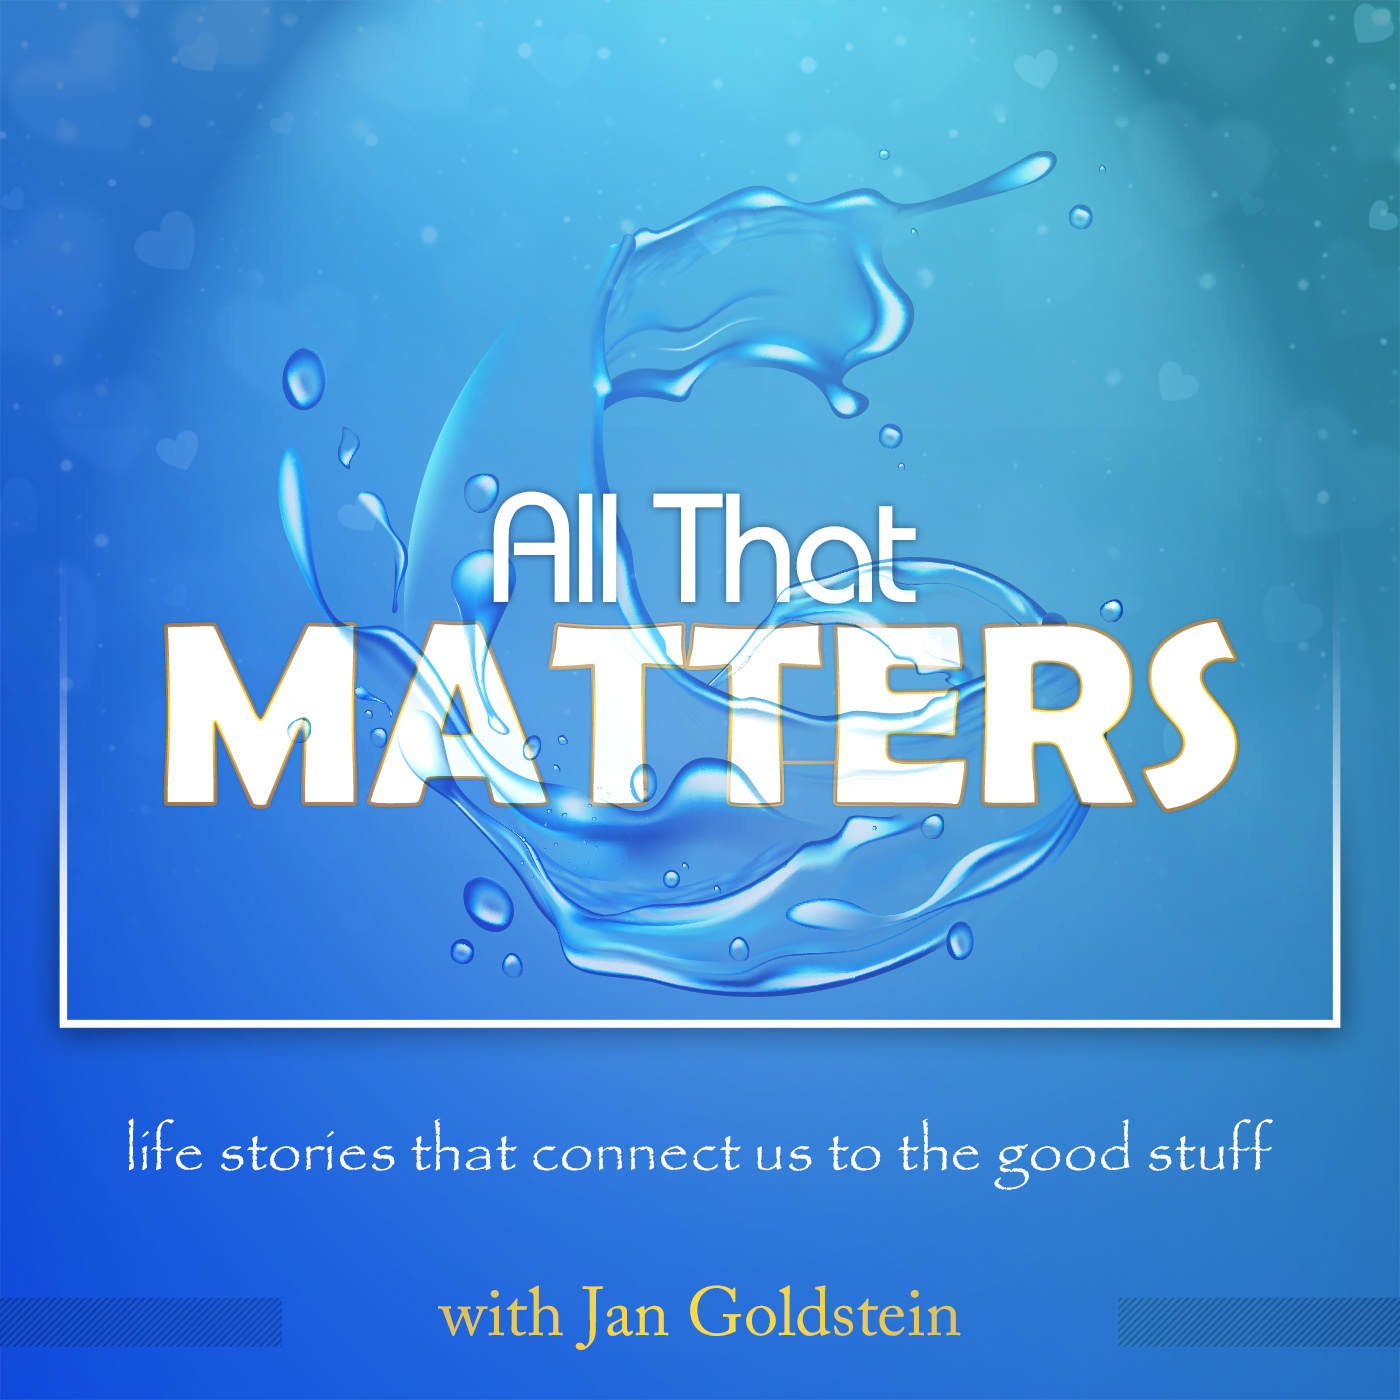 The Good Stuff Podcast